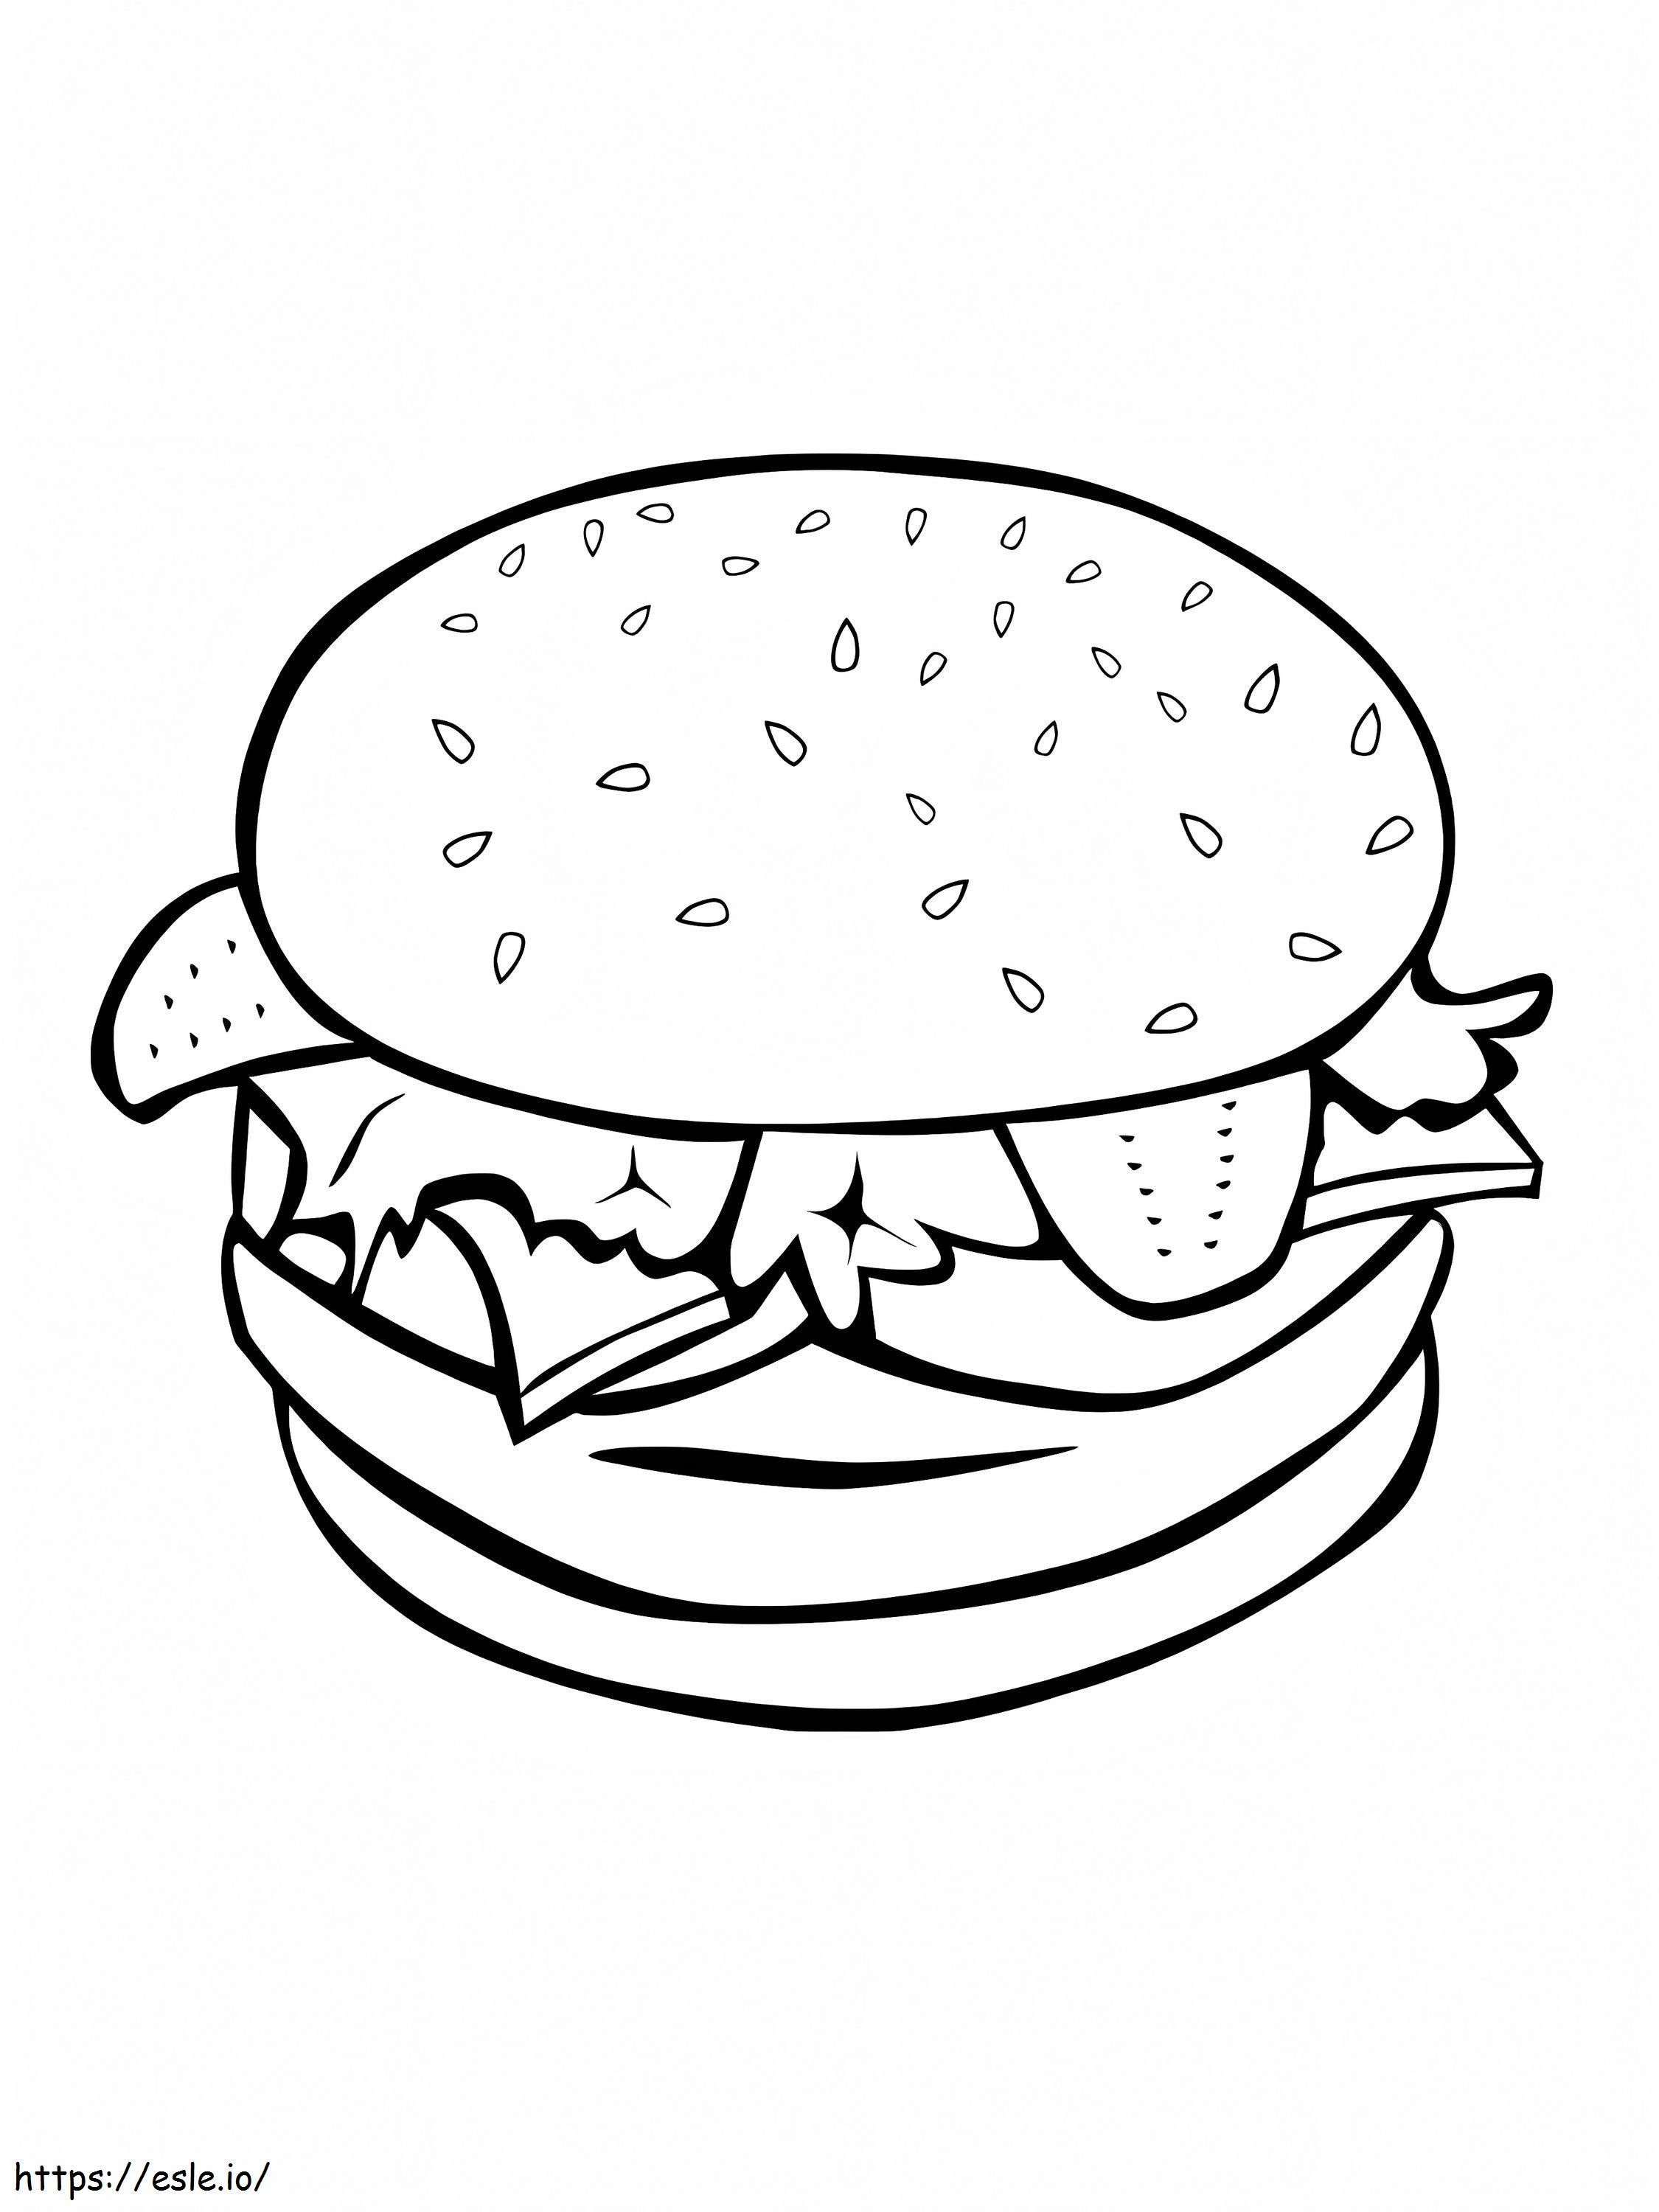 Normaler Burger ausmalbilder